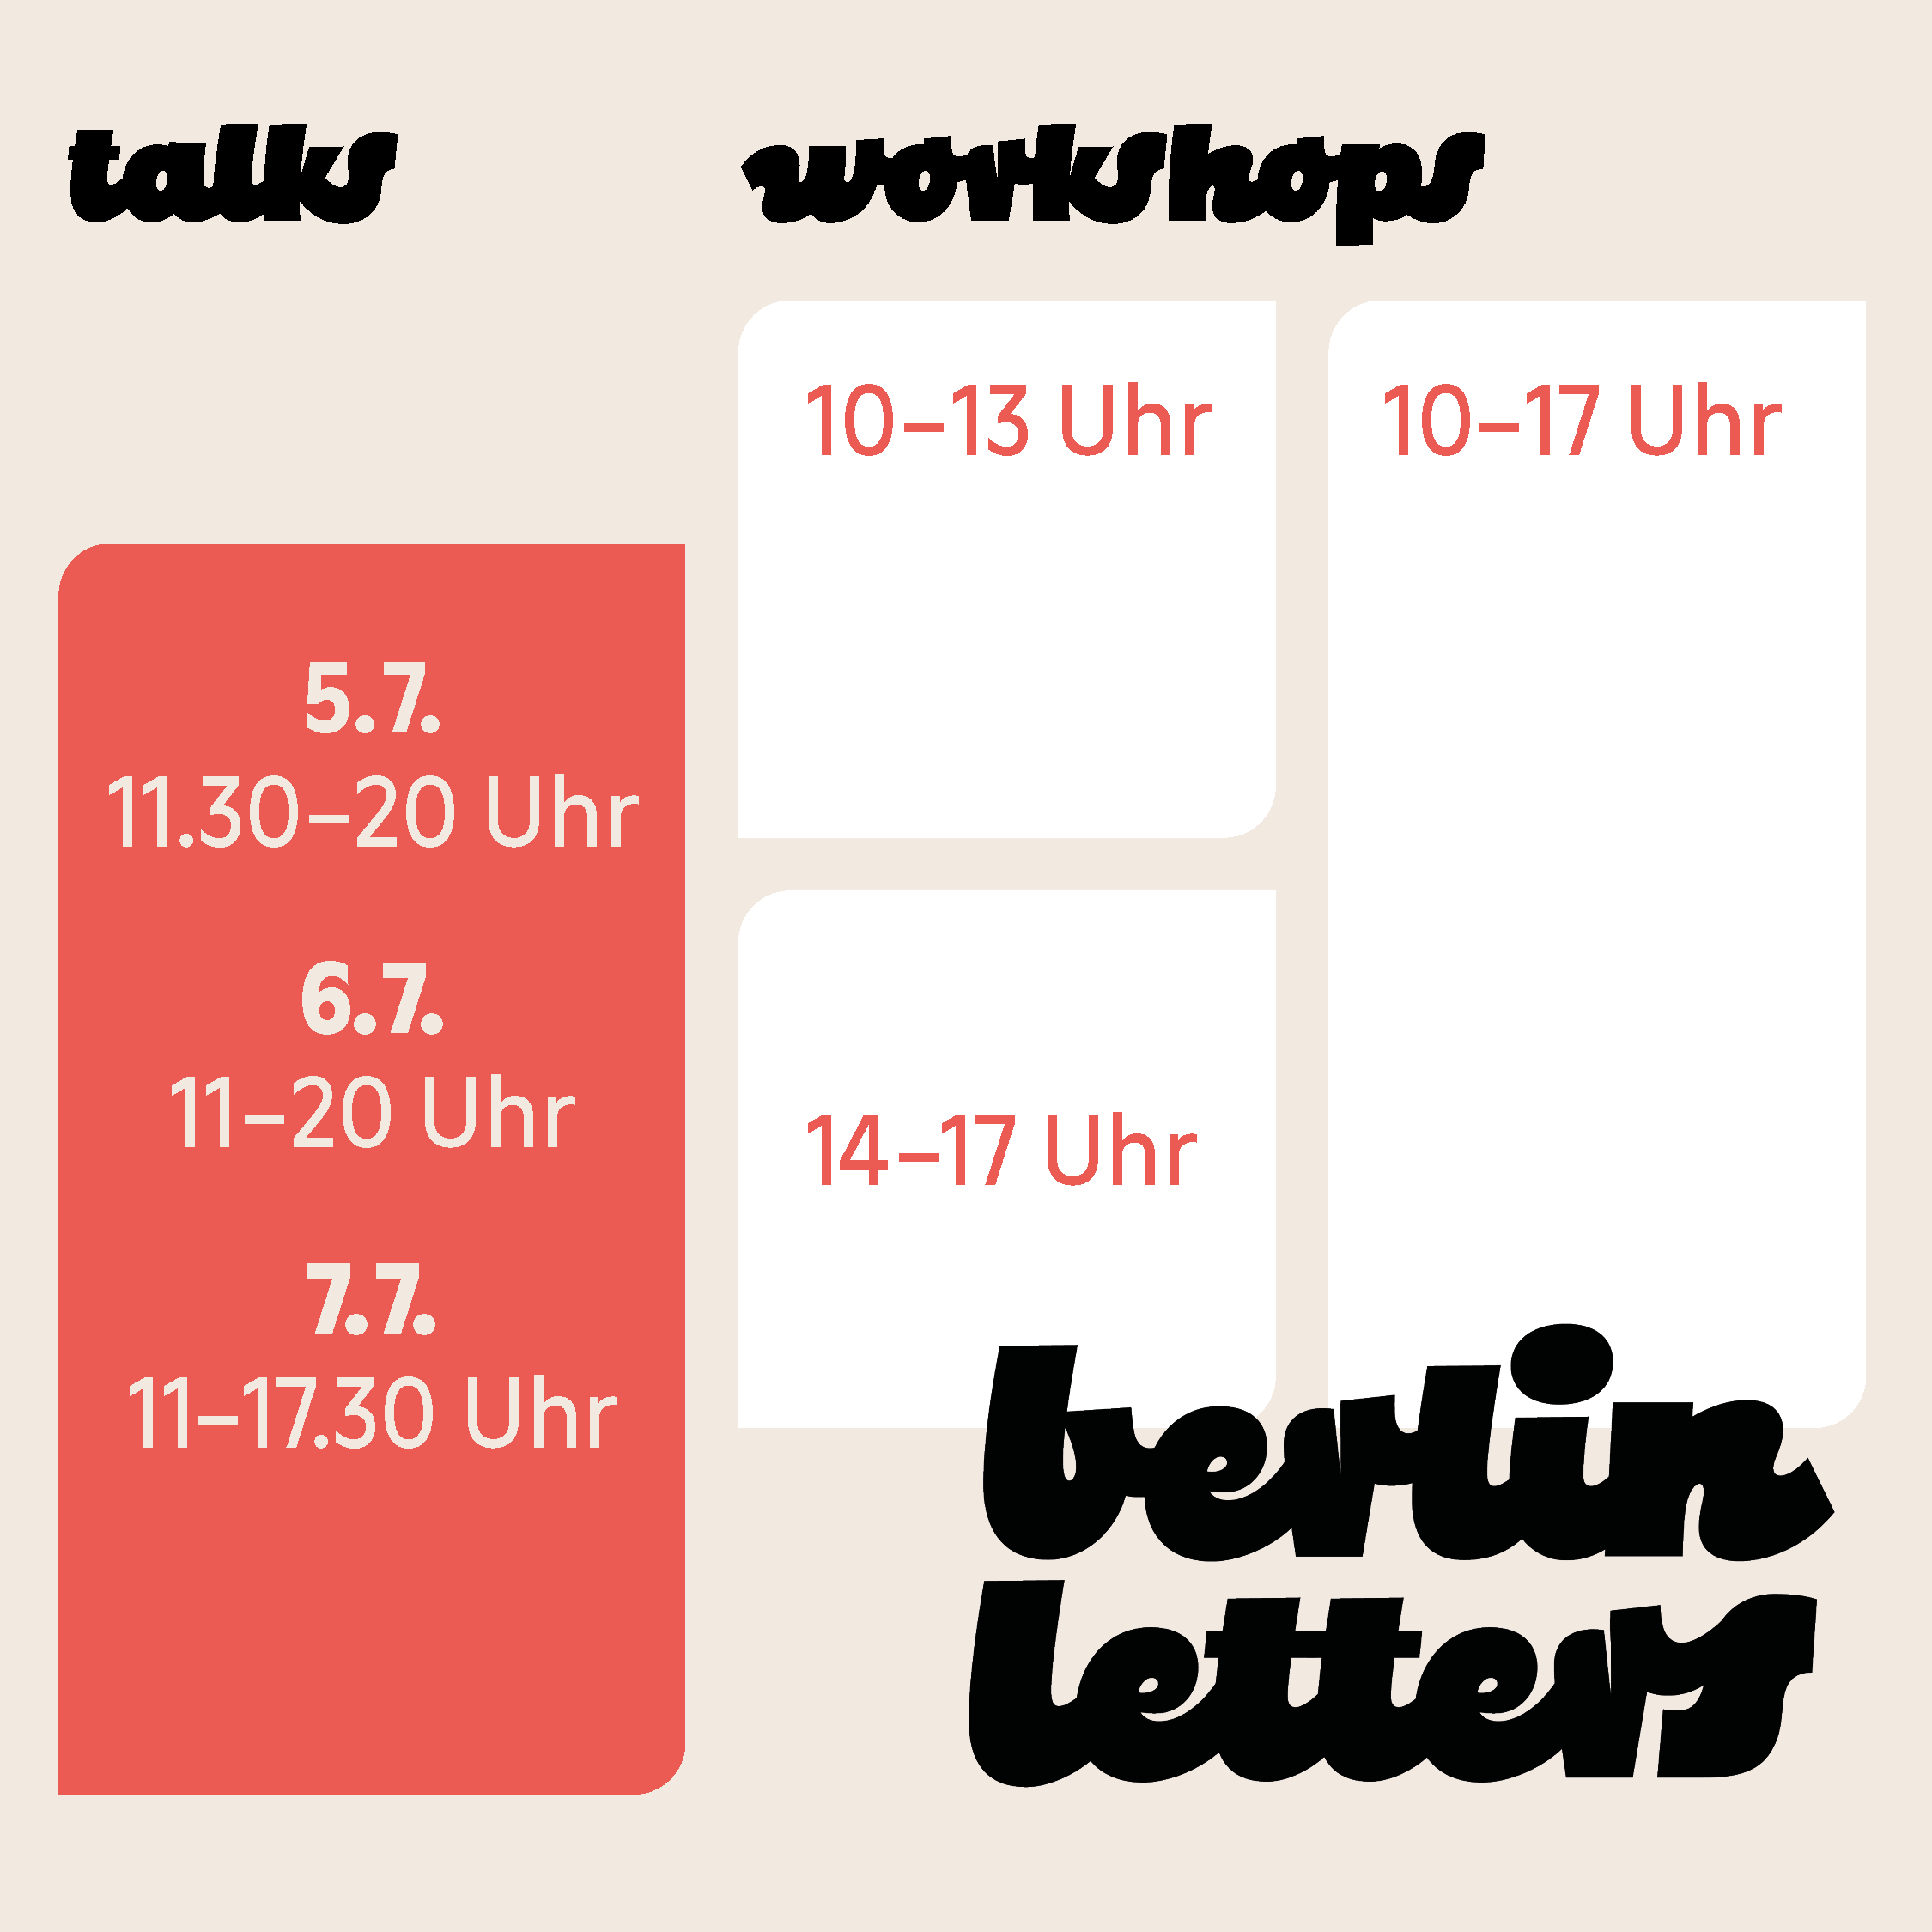 Timetable_Festival-Workshops-neu3